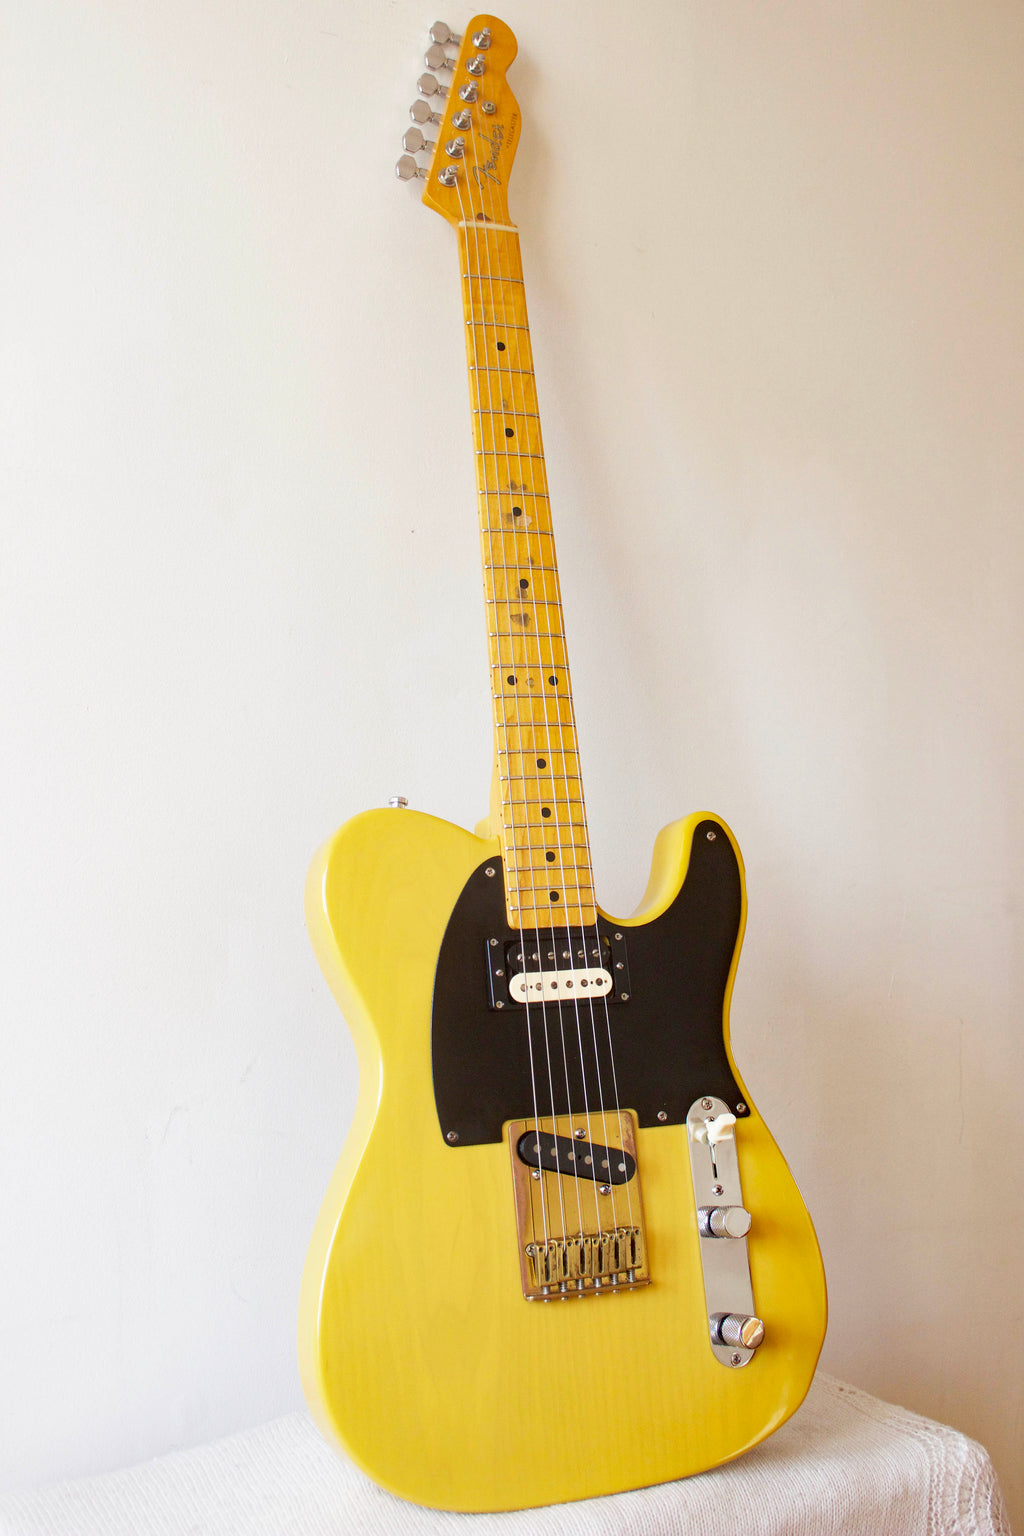 Fender '52 Reissue Telecaster Special TL52-70SPL Butterscotch Blonde 1986-7